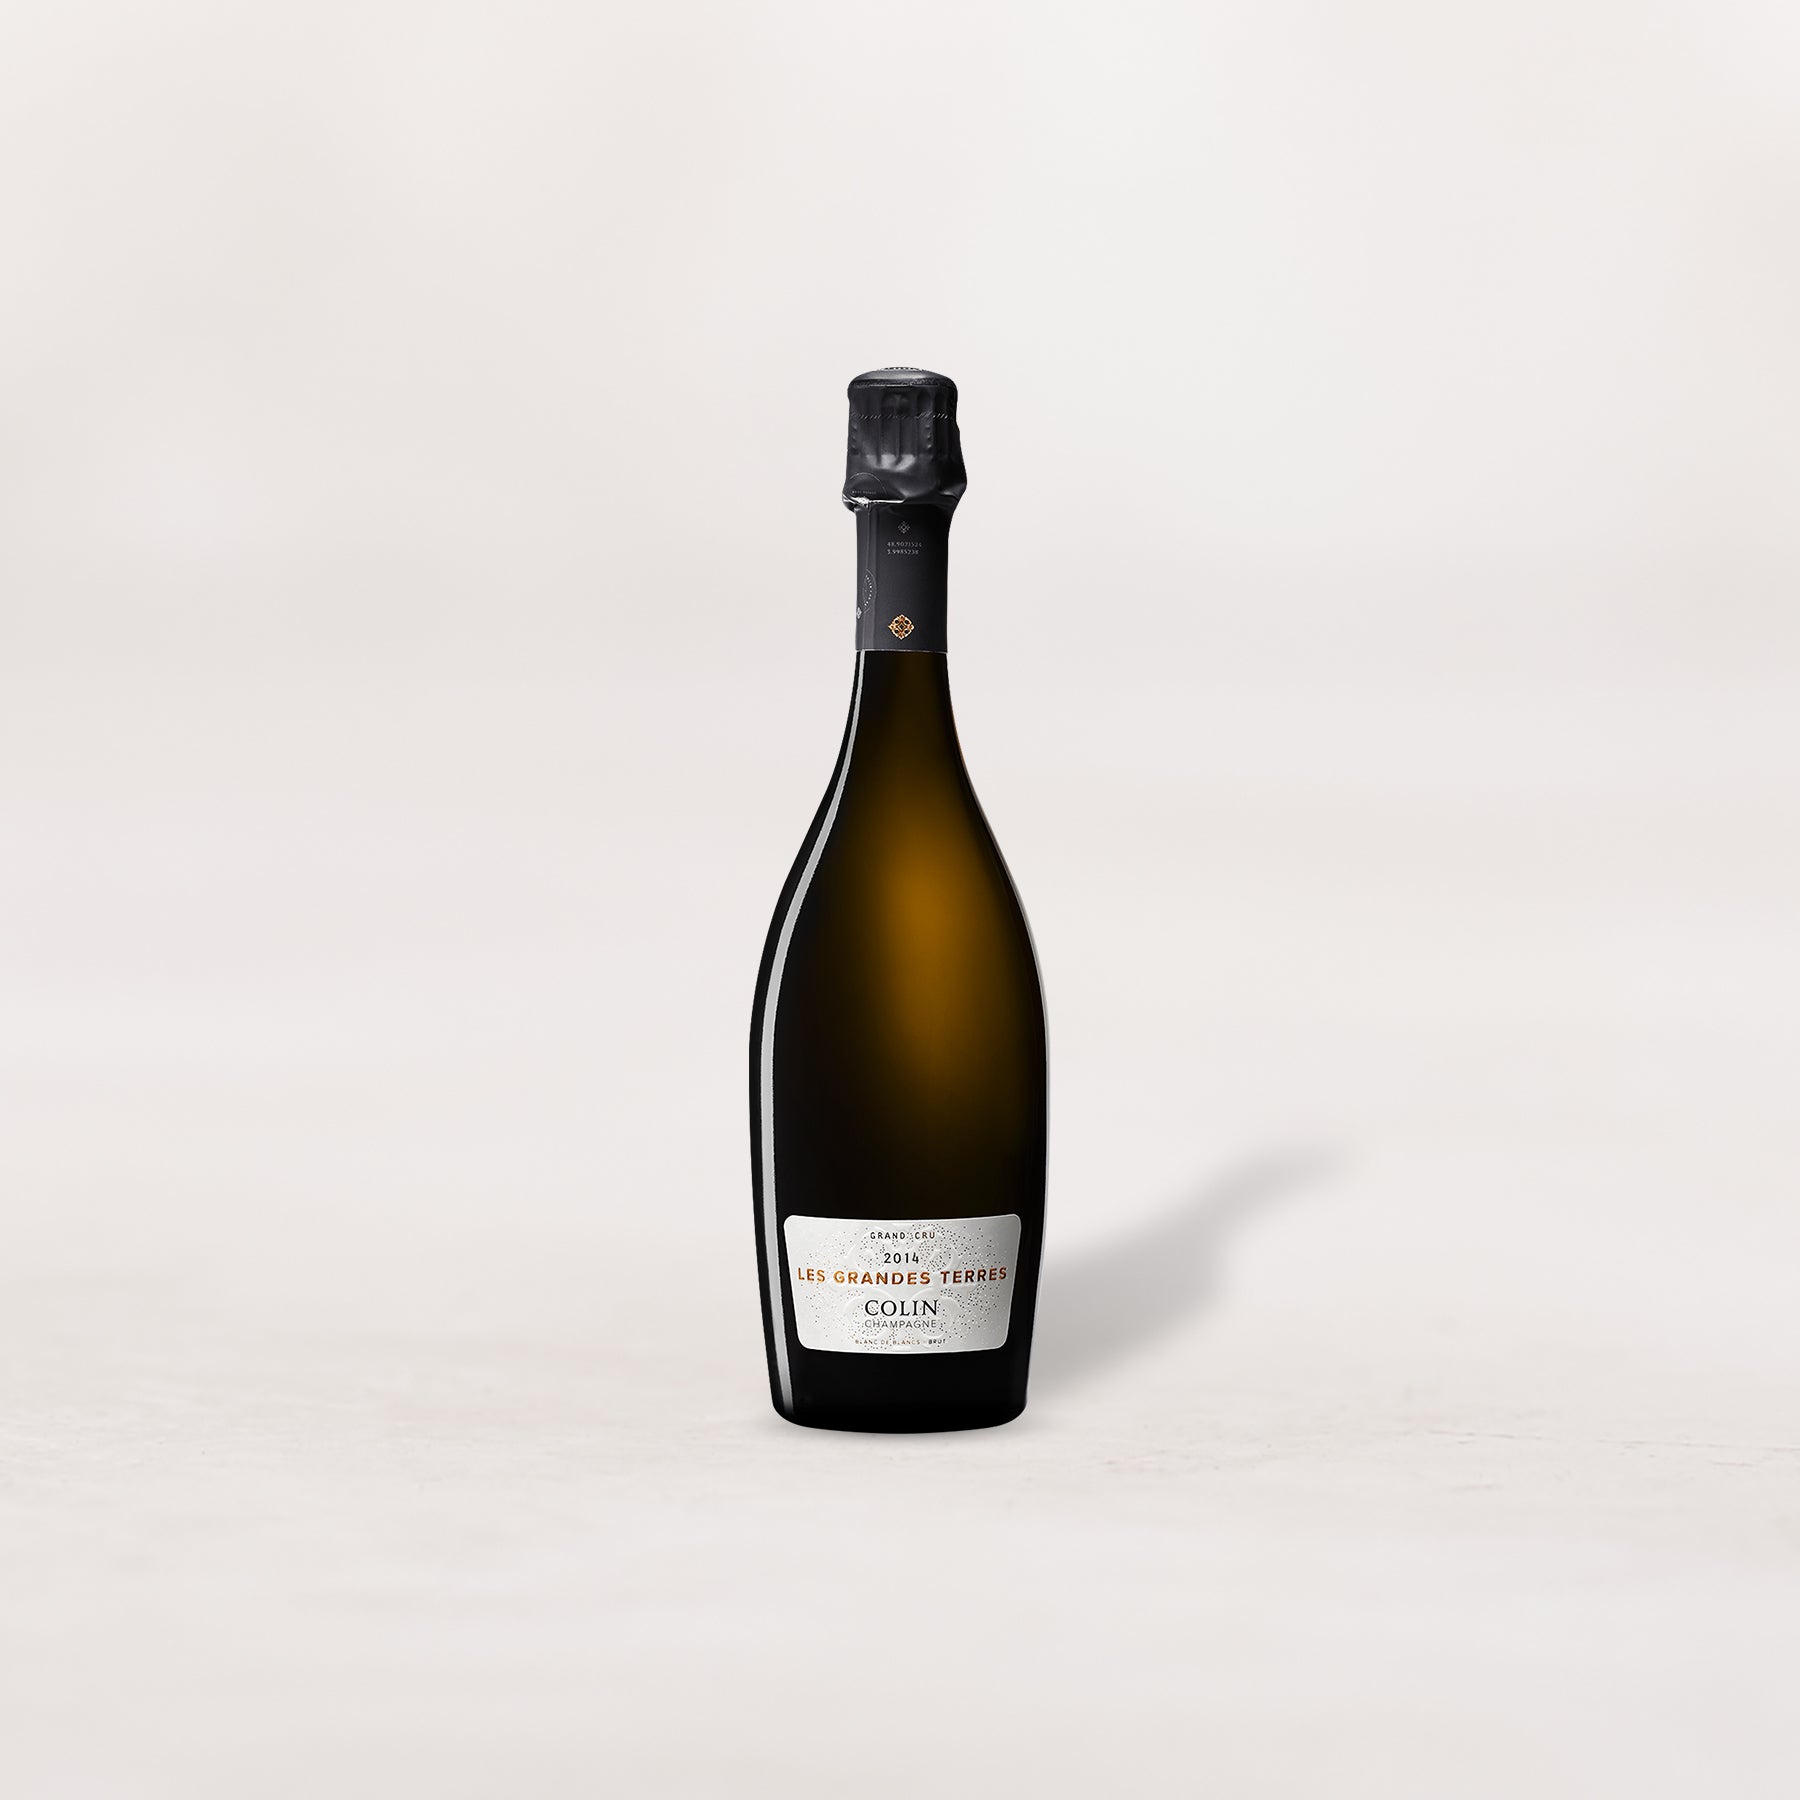 2014 Colin, Champagne Brut Grand Cru Blanc de Blancs Millesime “Les Grandes Terres”